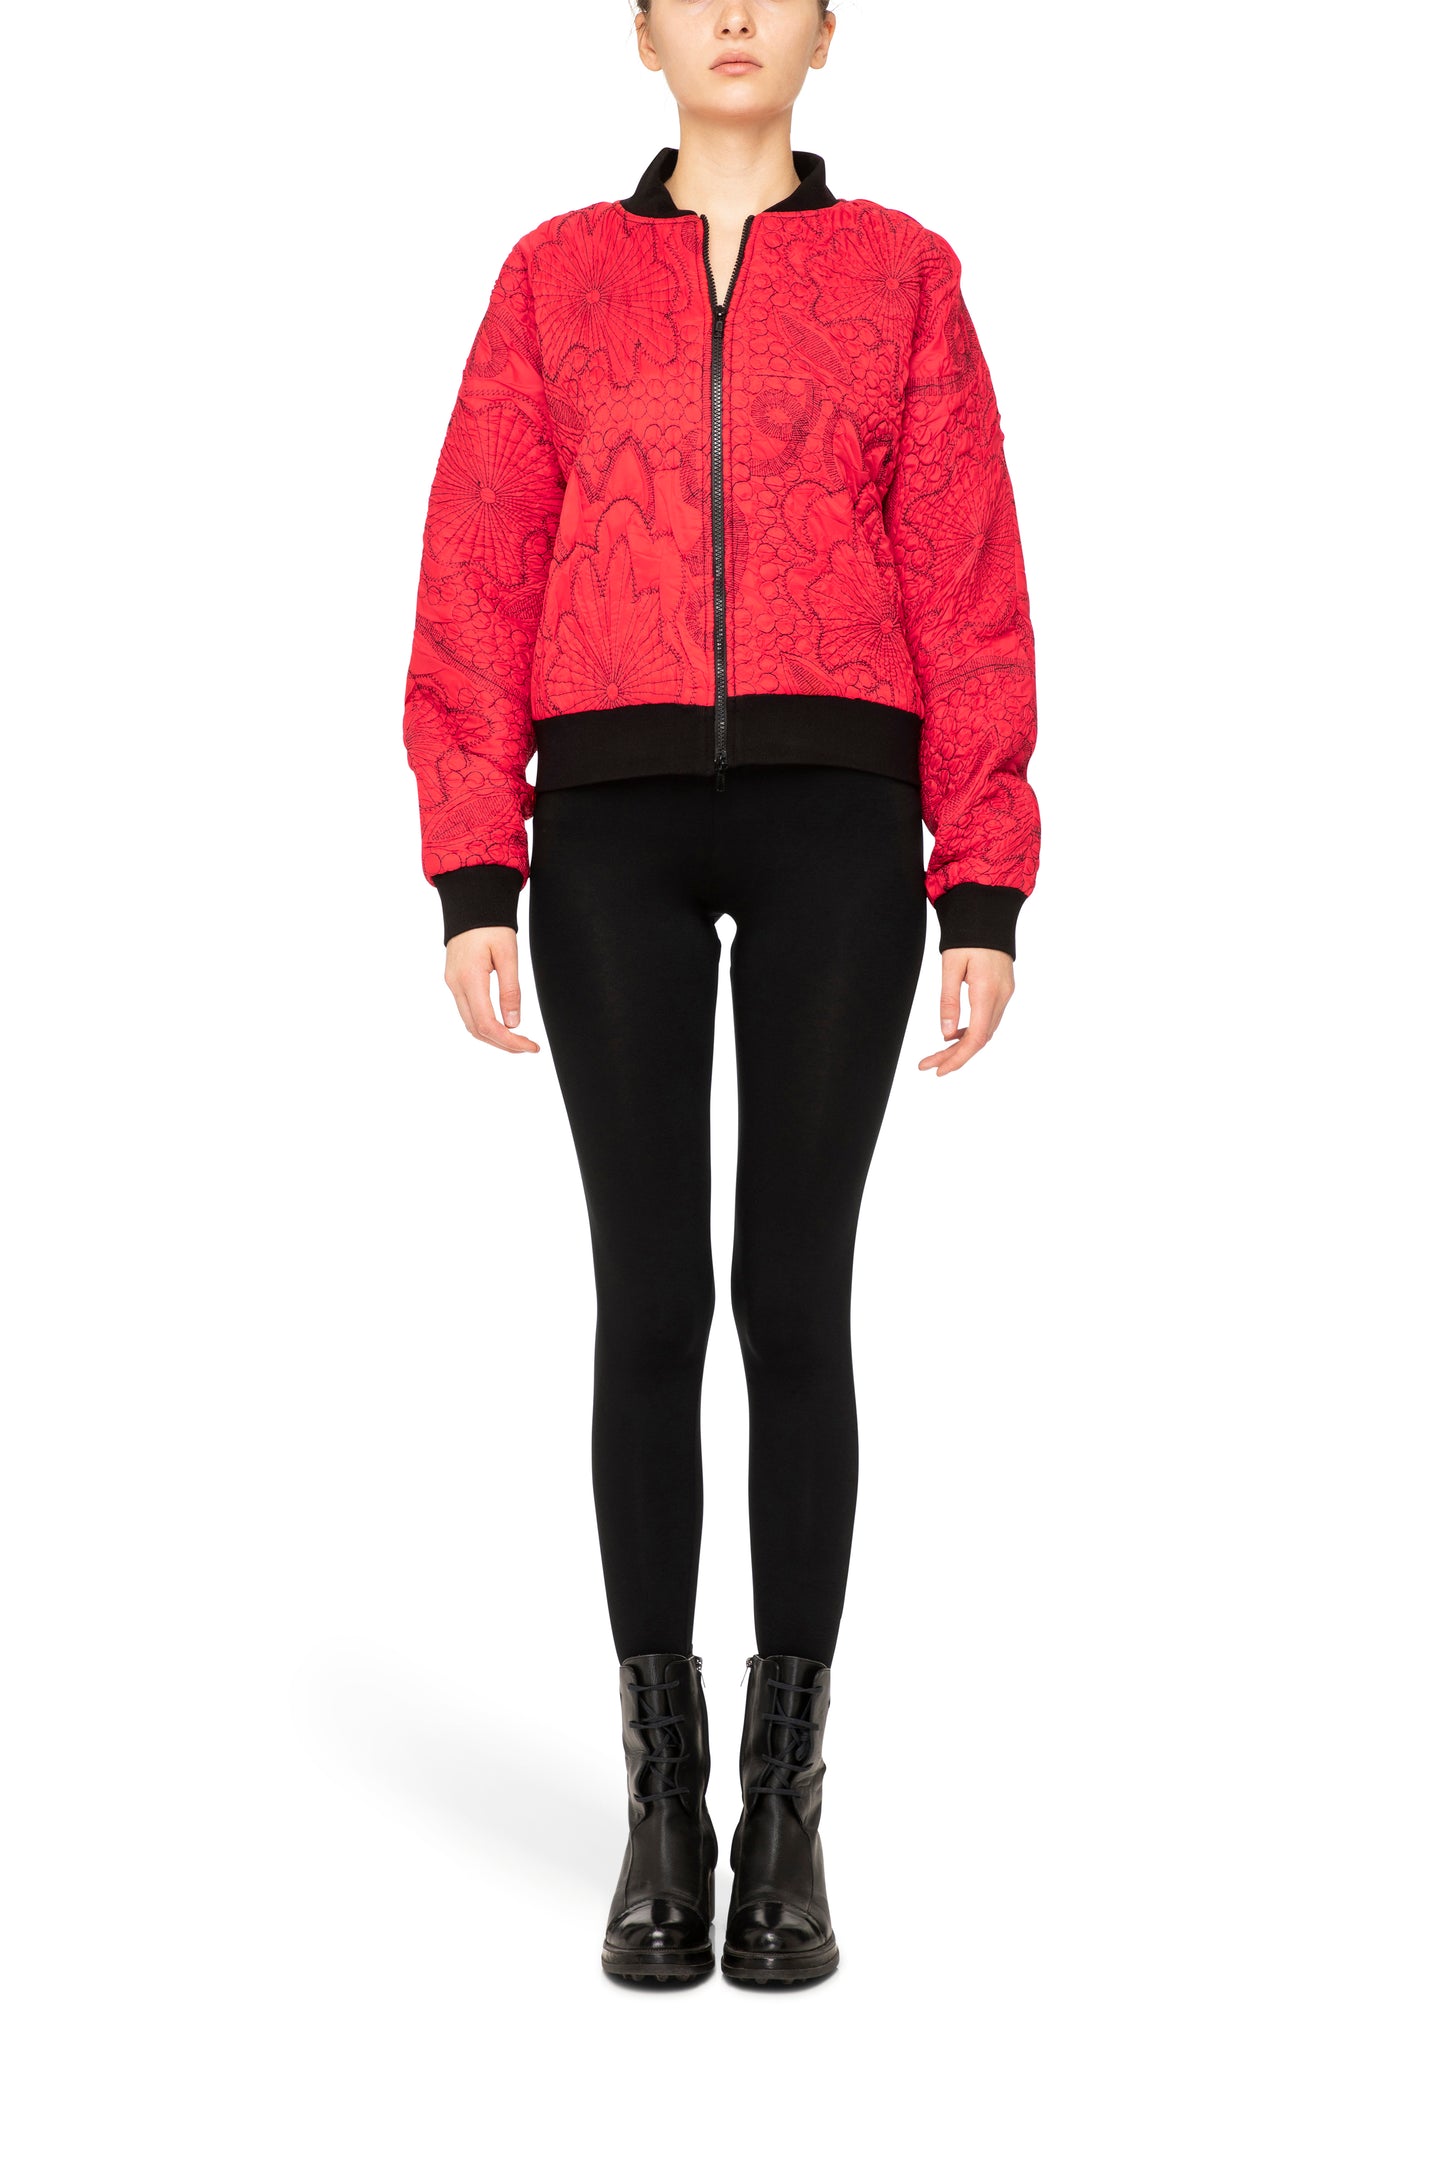 Lampo Bomber Jacket in Red, red bomber jacket, black and red jacket, embroidered jacket, fashion jacket, designer jacket